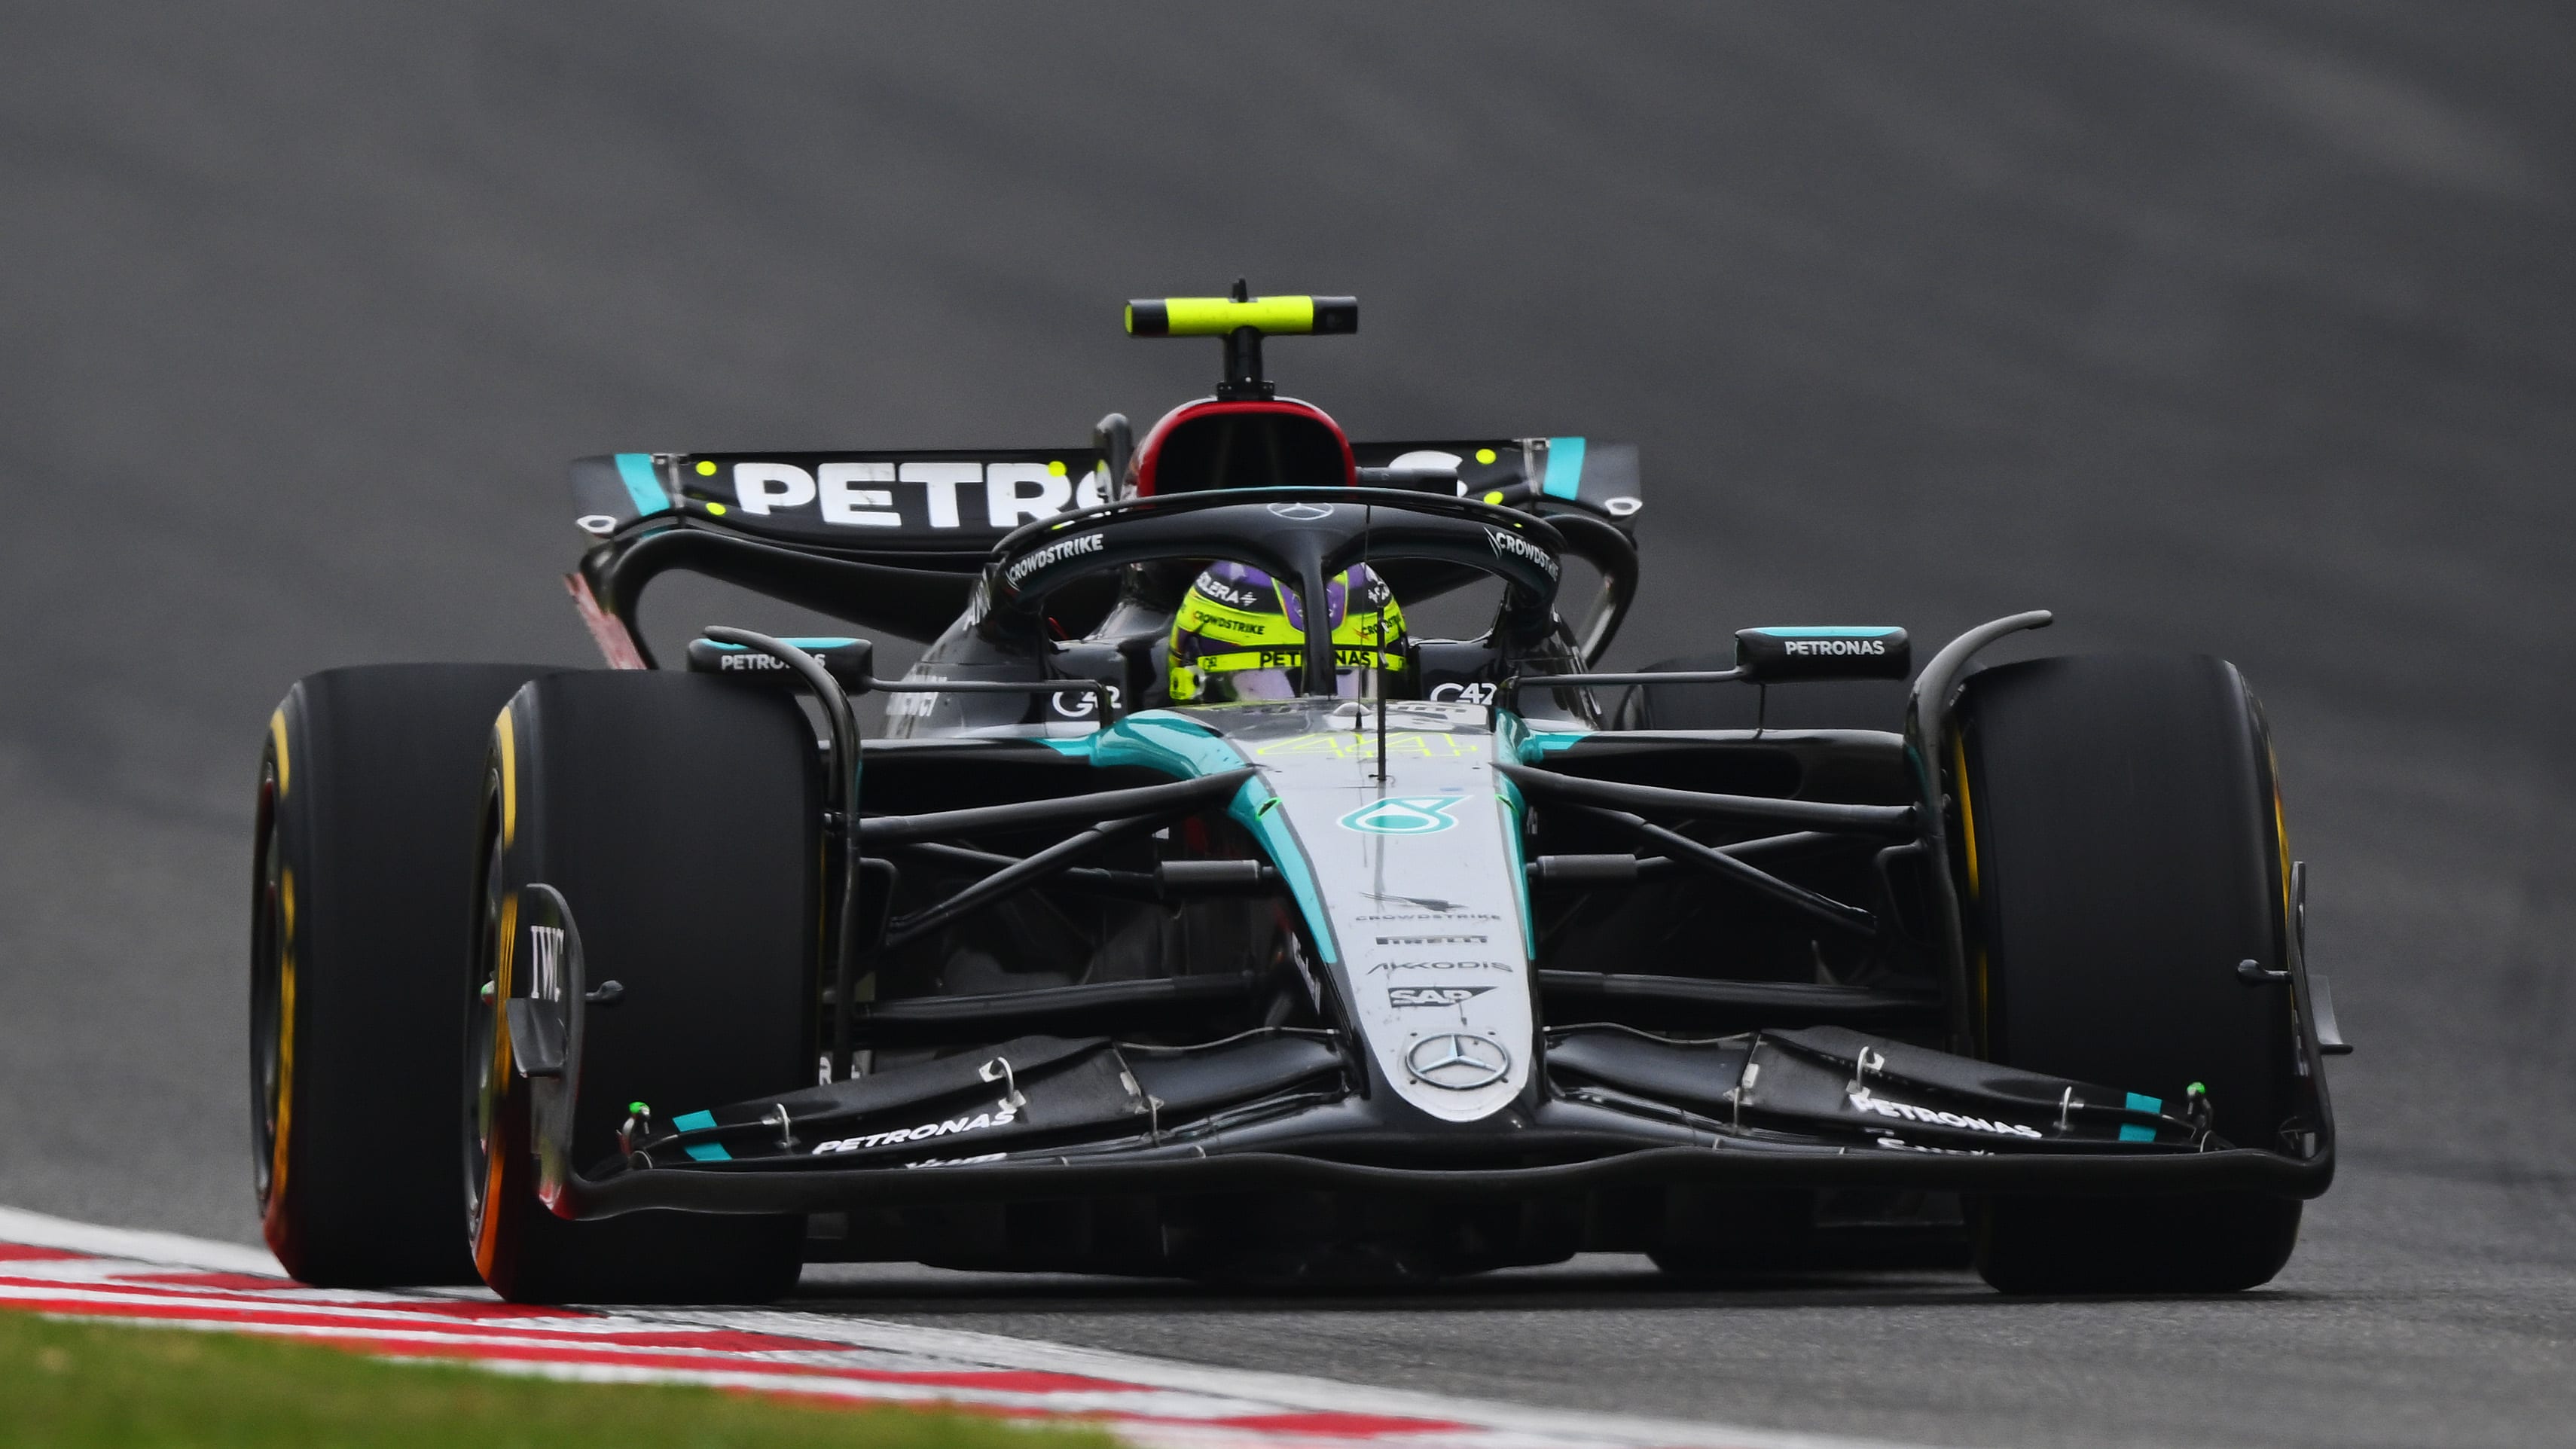 SHANGHAI, CHINA - APRIL 21: Lewis Hamilton of Great Britain driving the (44) Mercedes AMG Petronas